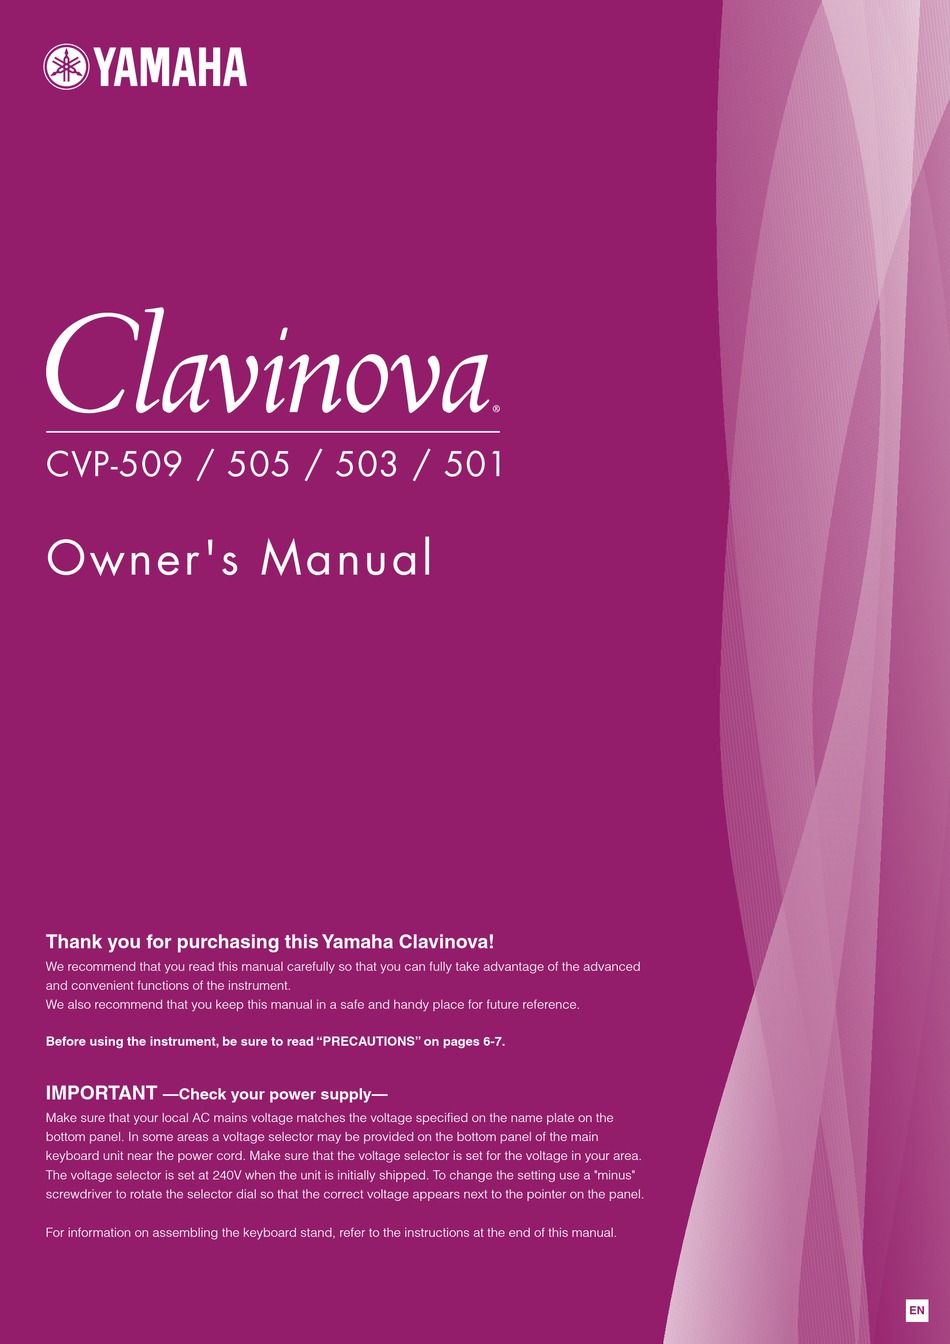 YAMAHA CLAVINOVA CVP-501 OWNER'S MANUAL Pdf Download | ManualsLib